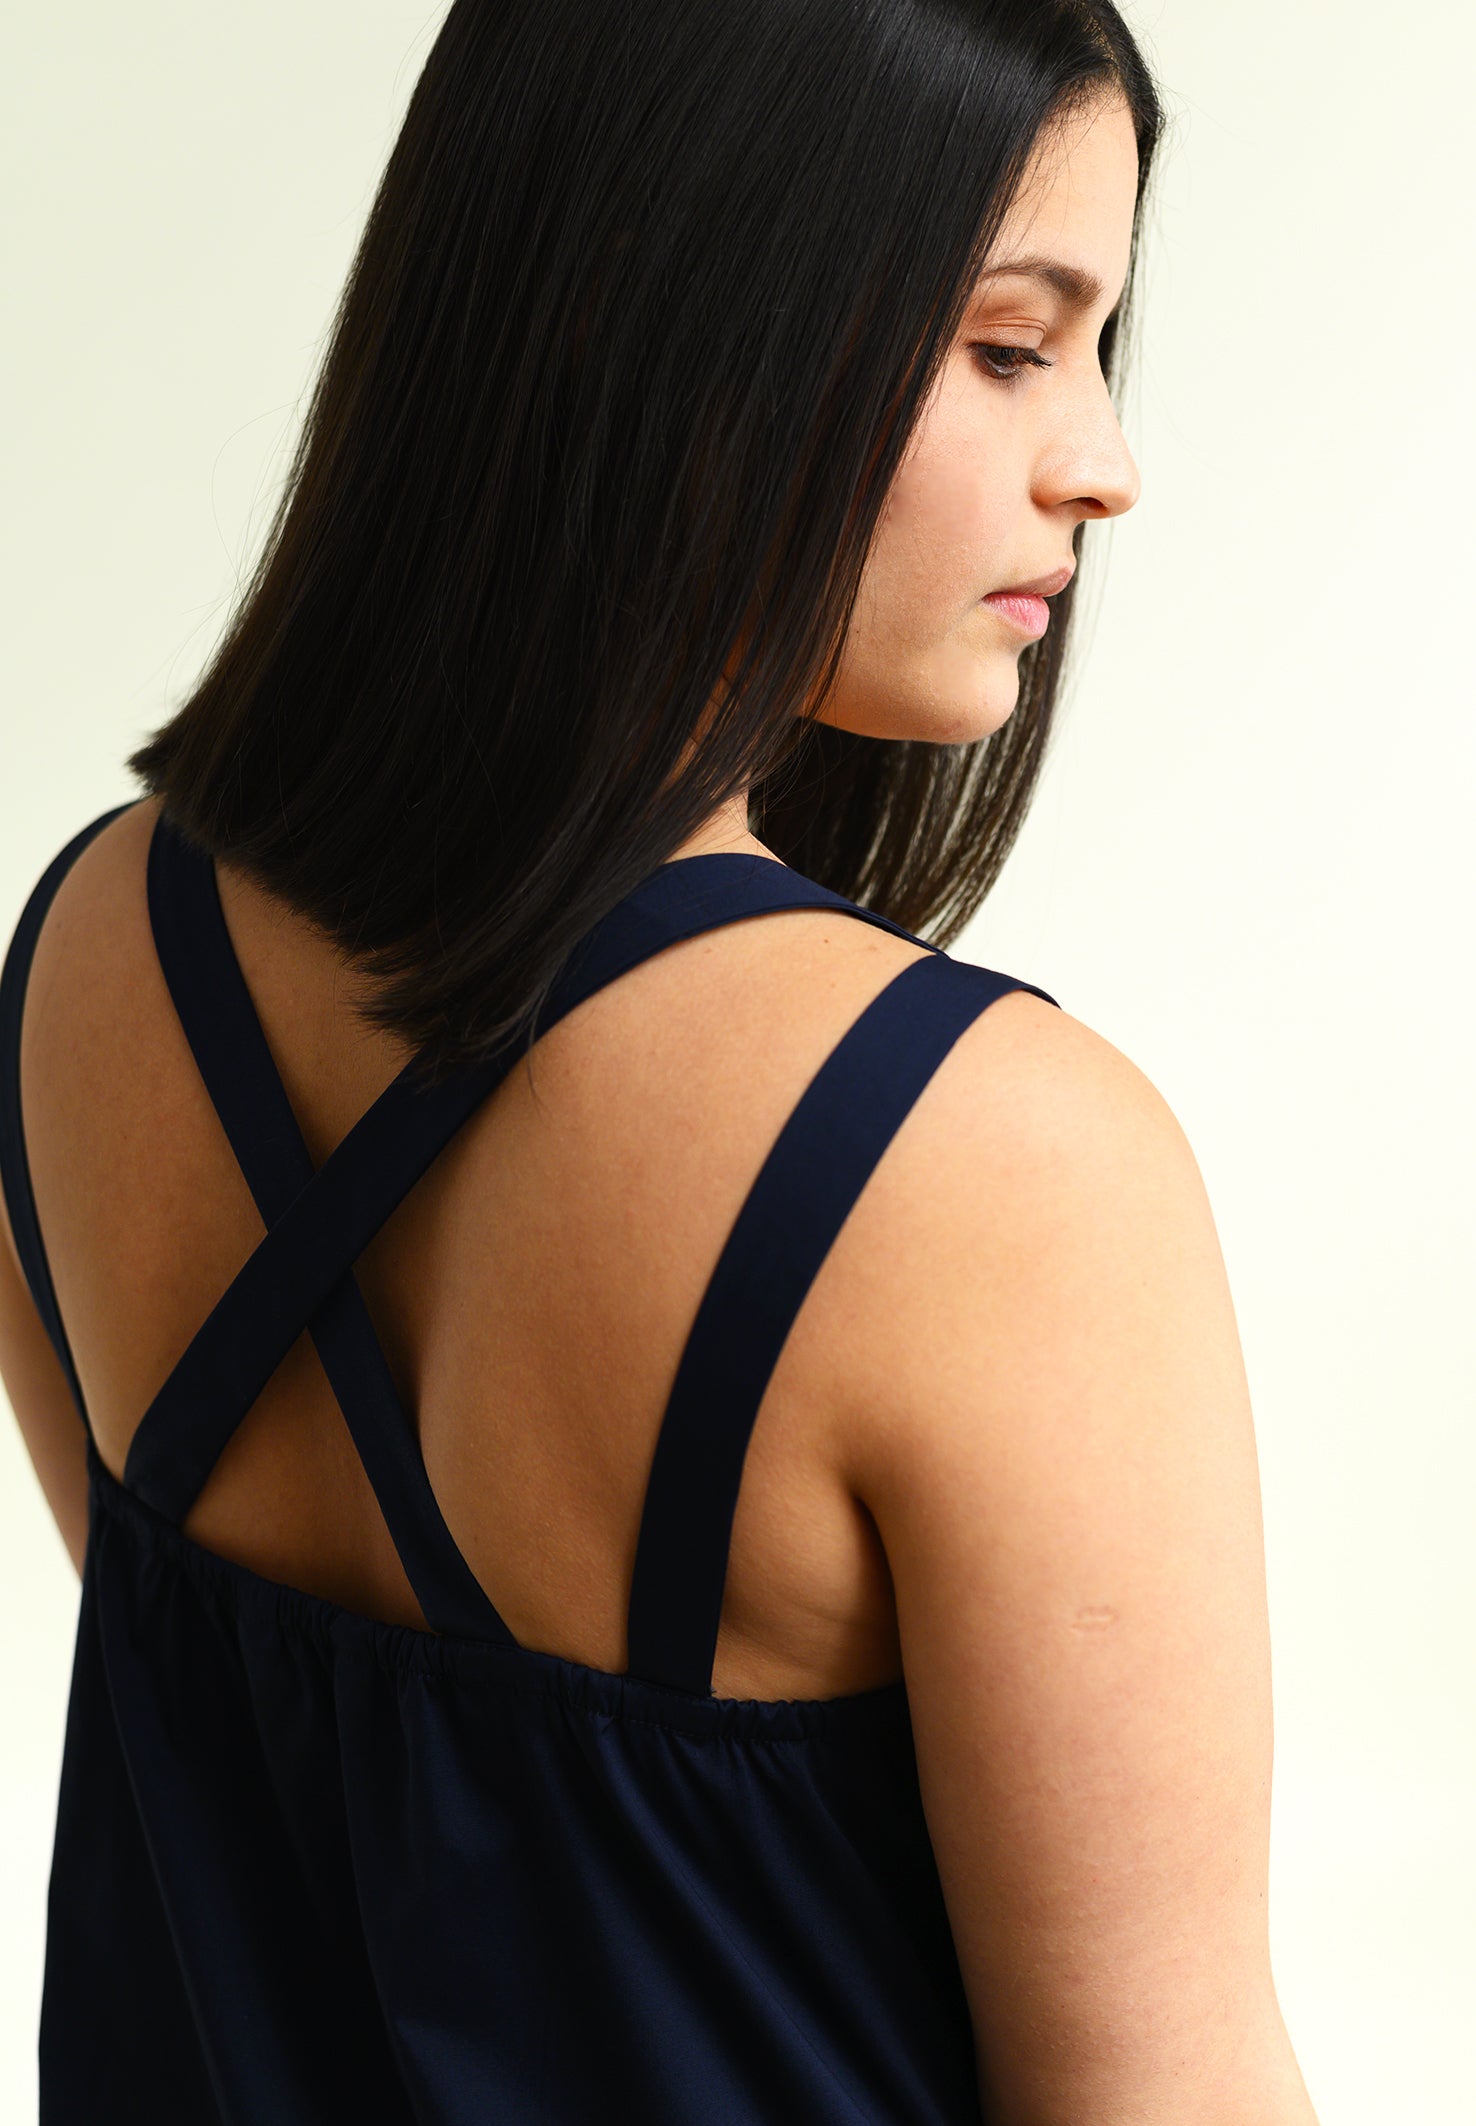 O-TERRE maxi dress in dark blue made of organic cotton